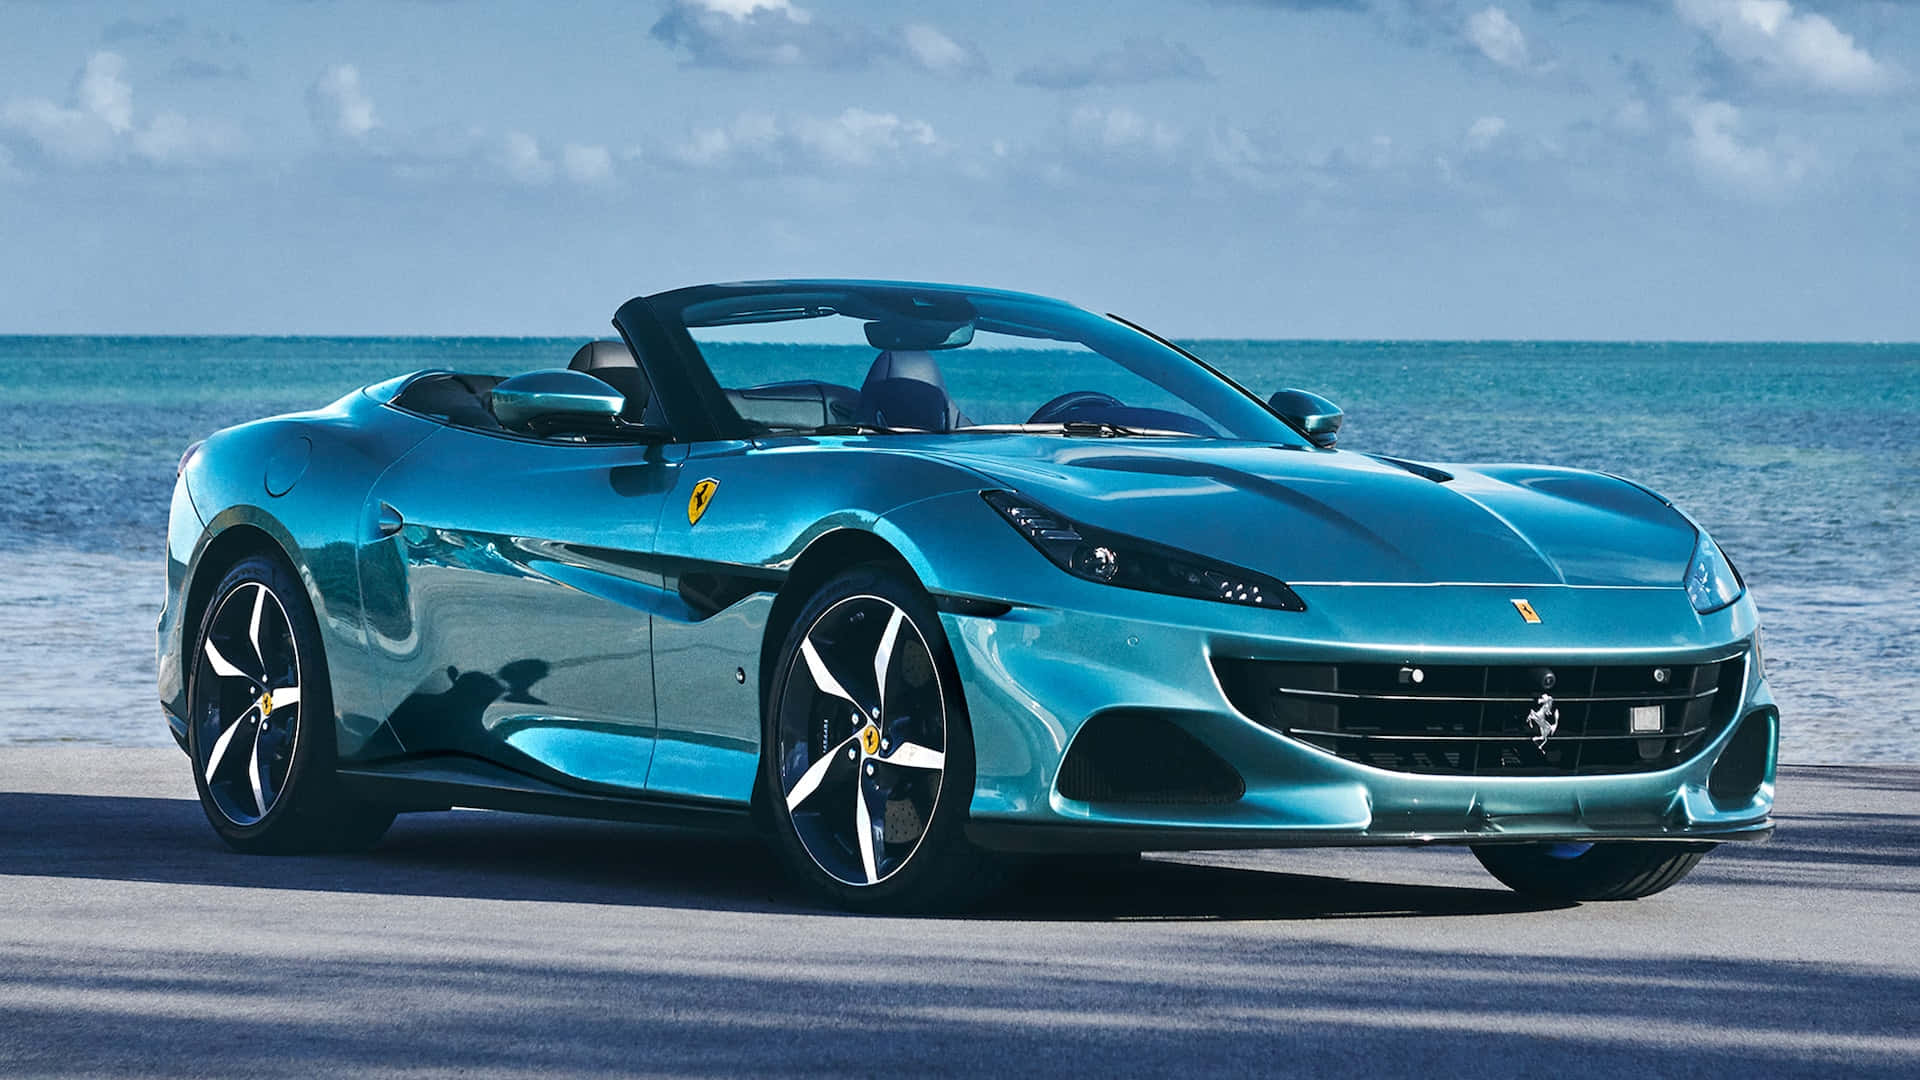 Caption: The Exhilarating Ferrari Portofino in its Full Glory Wallpaper